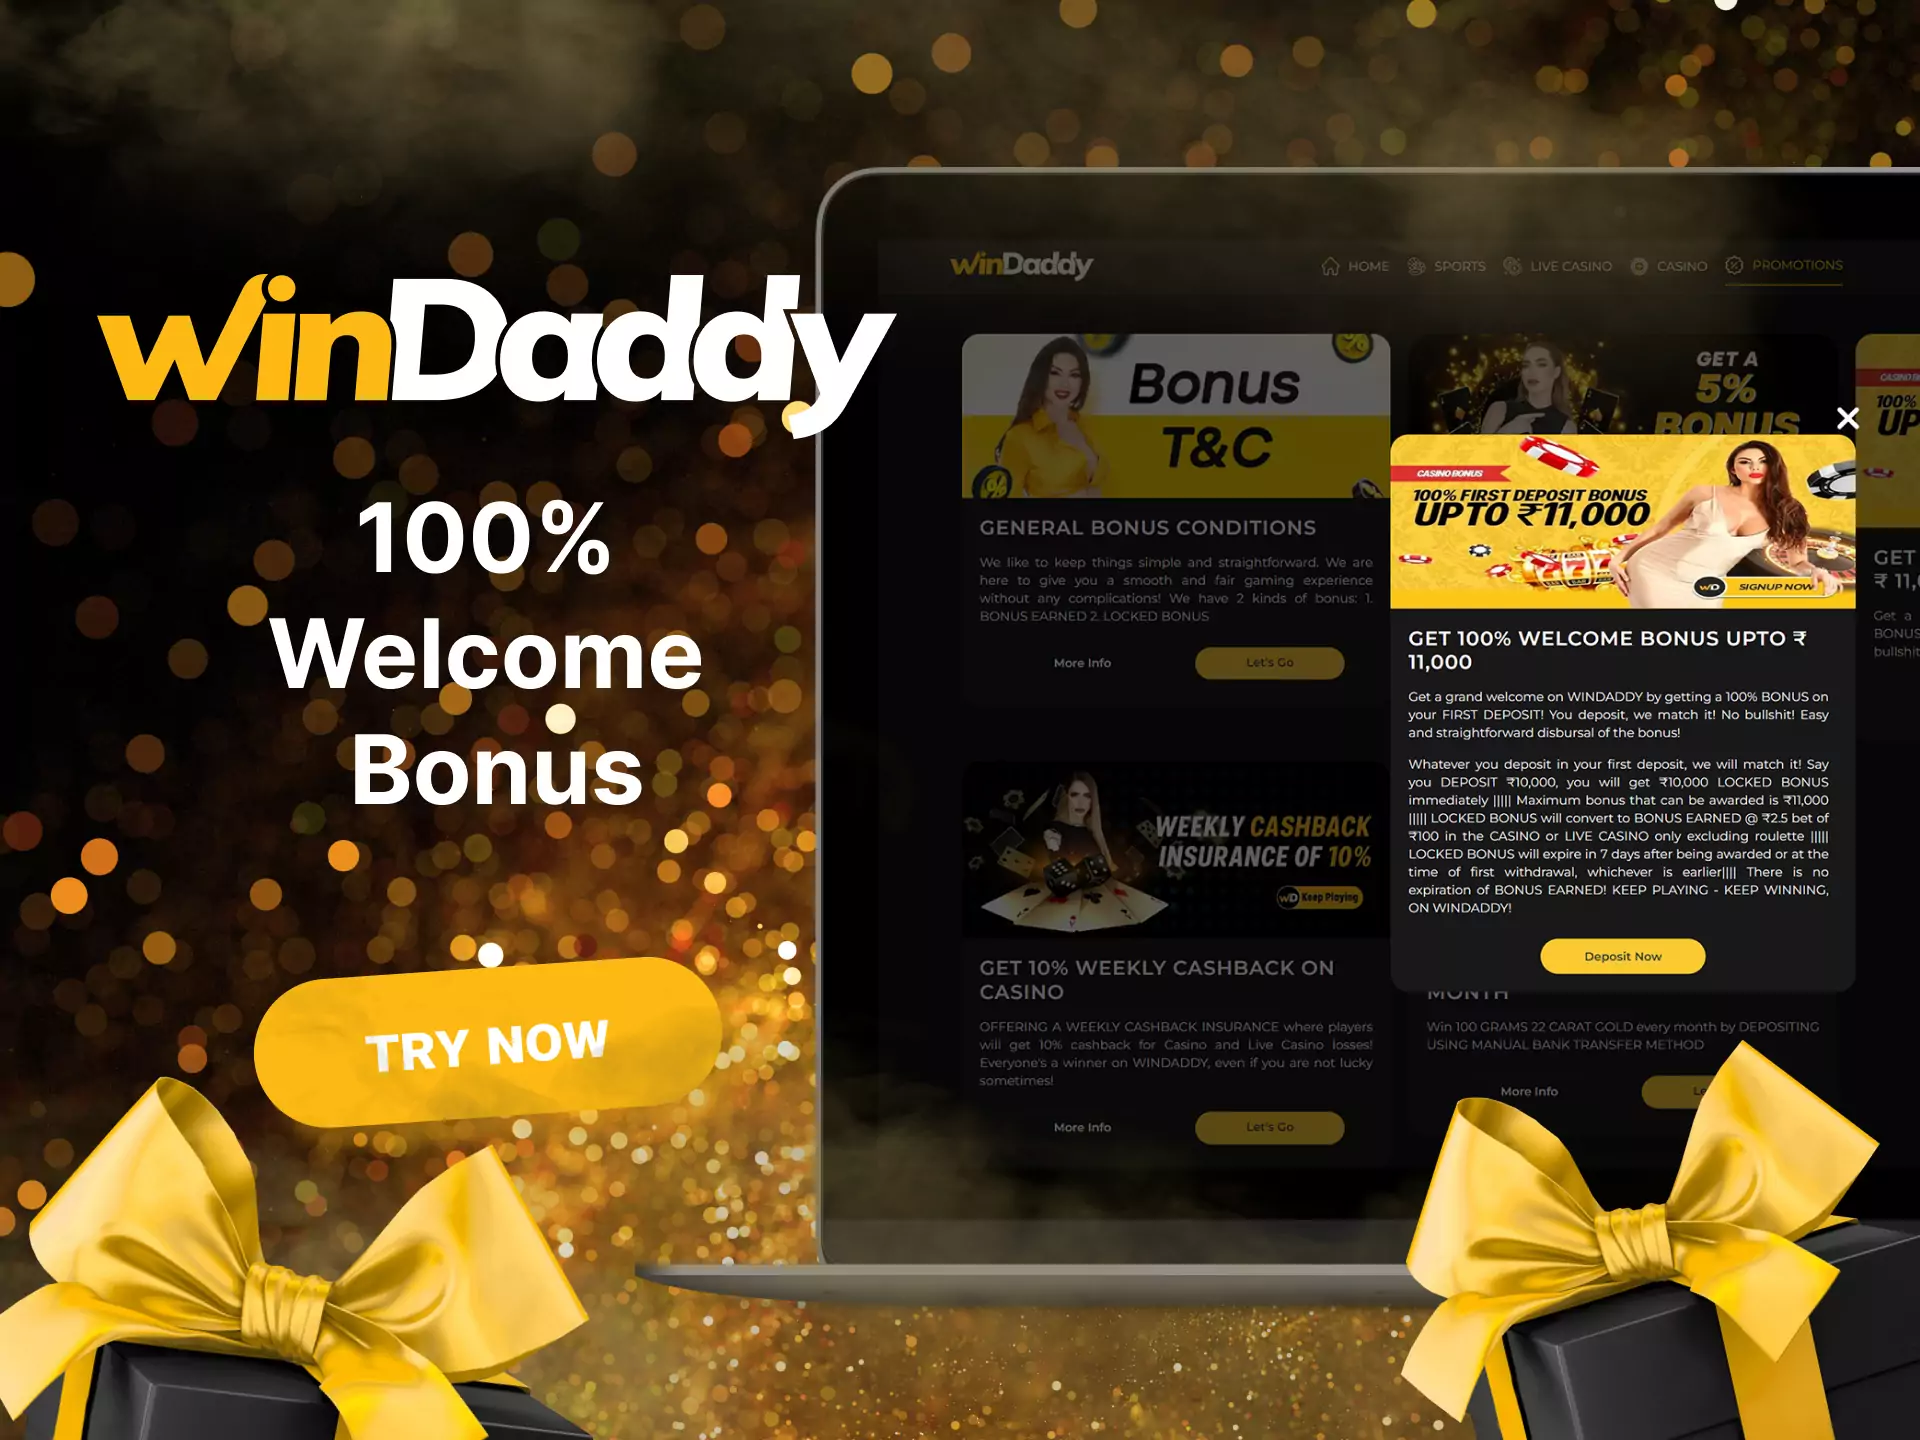 Try 100% welcome bonus on the Windaddy platform.